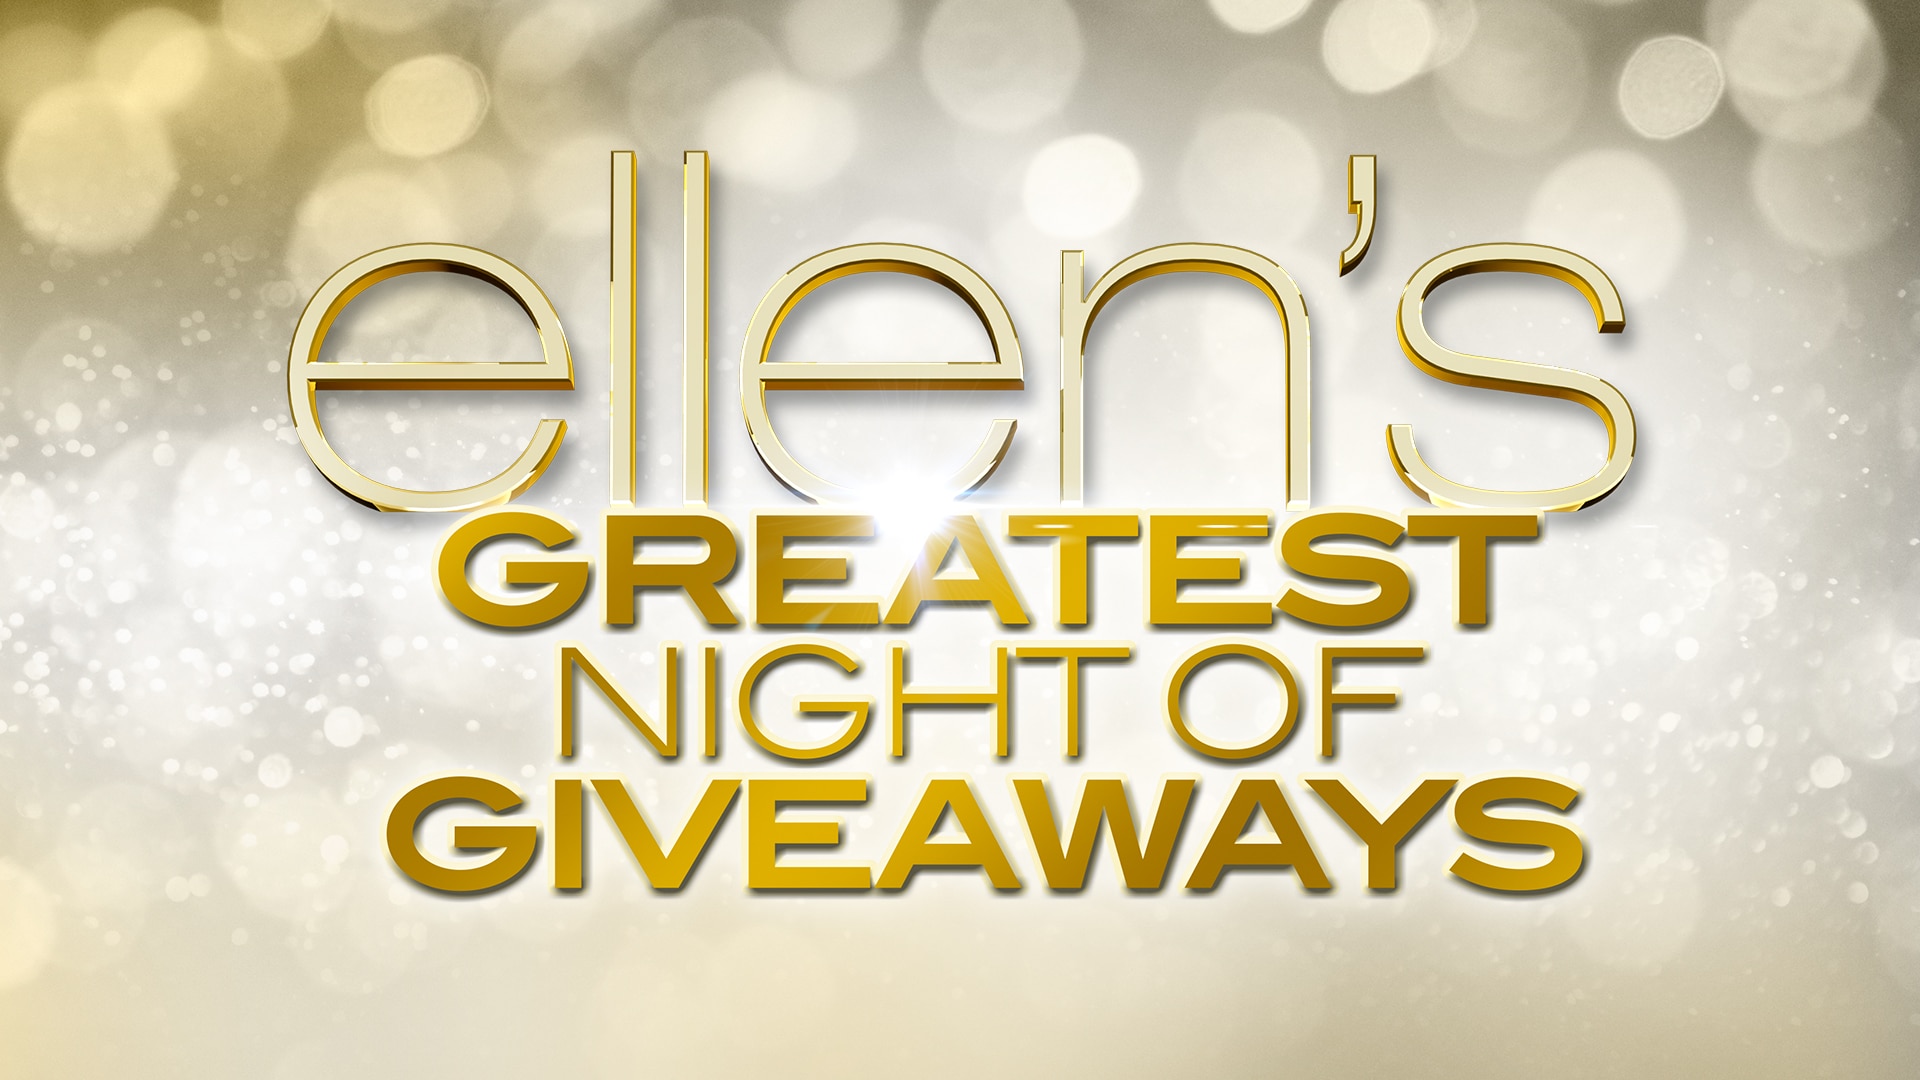 Ellens Greatest Night Of Giveaways